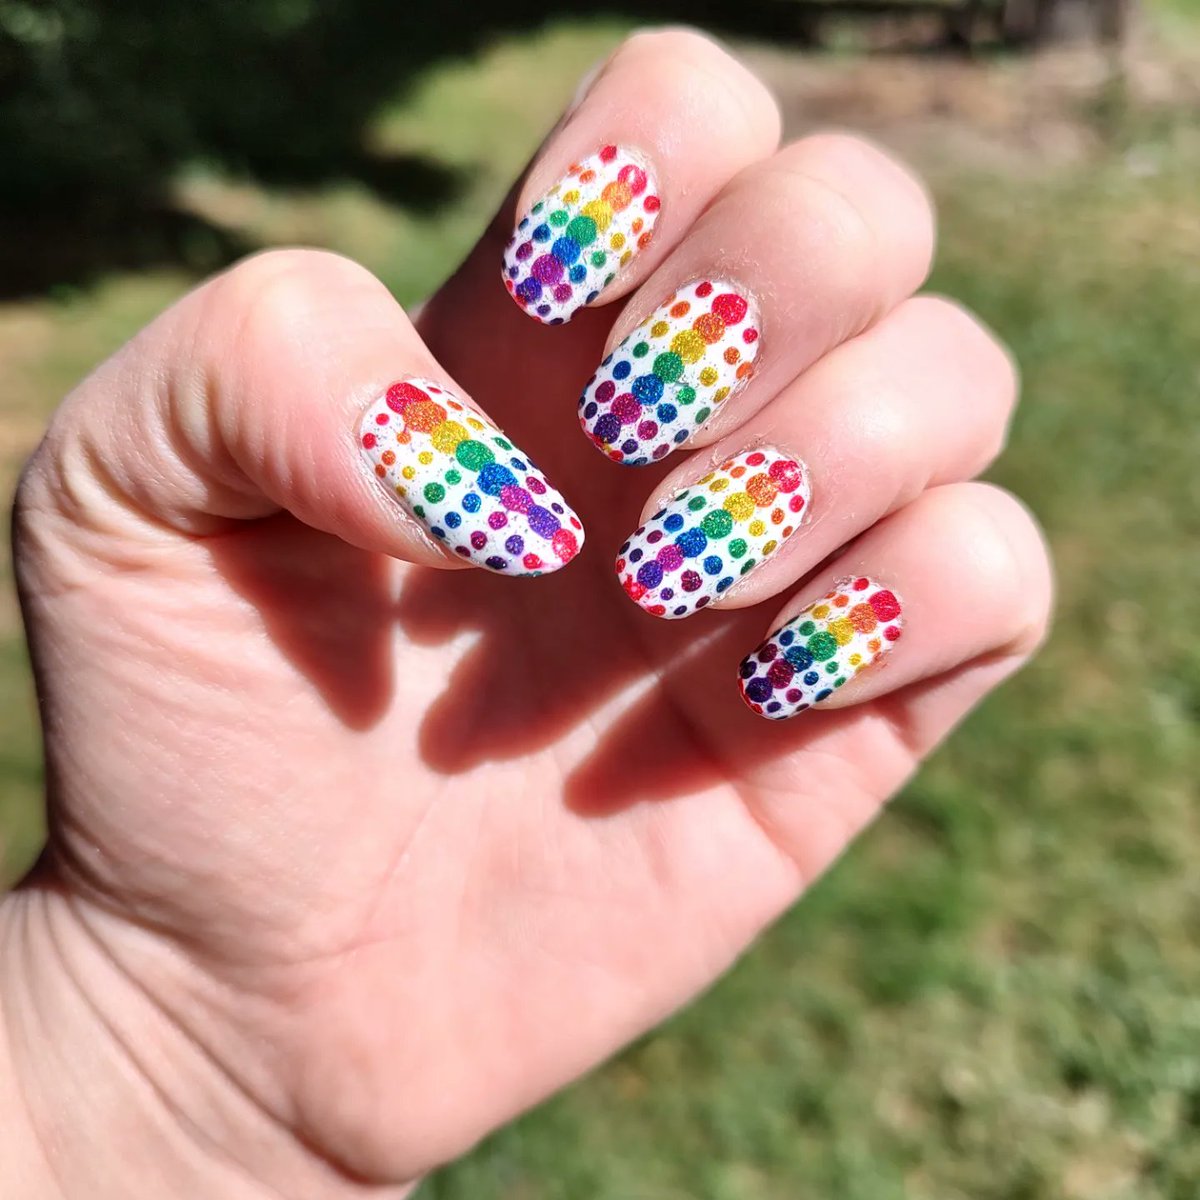 Rainbow nails for pride month using @nailogical  @holotaco polishes ❤️🧡💛💚💙🤎🖤🤍 #holotaco #rainbownails #pridenails